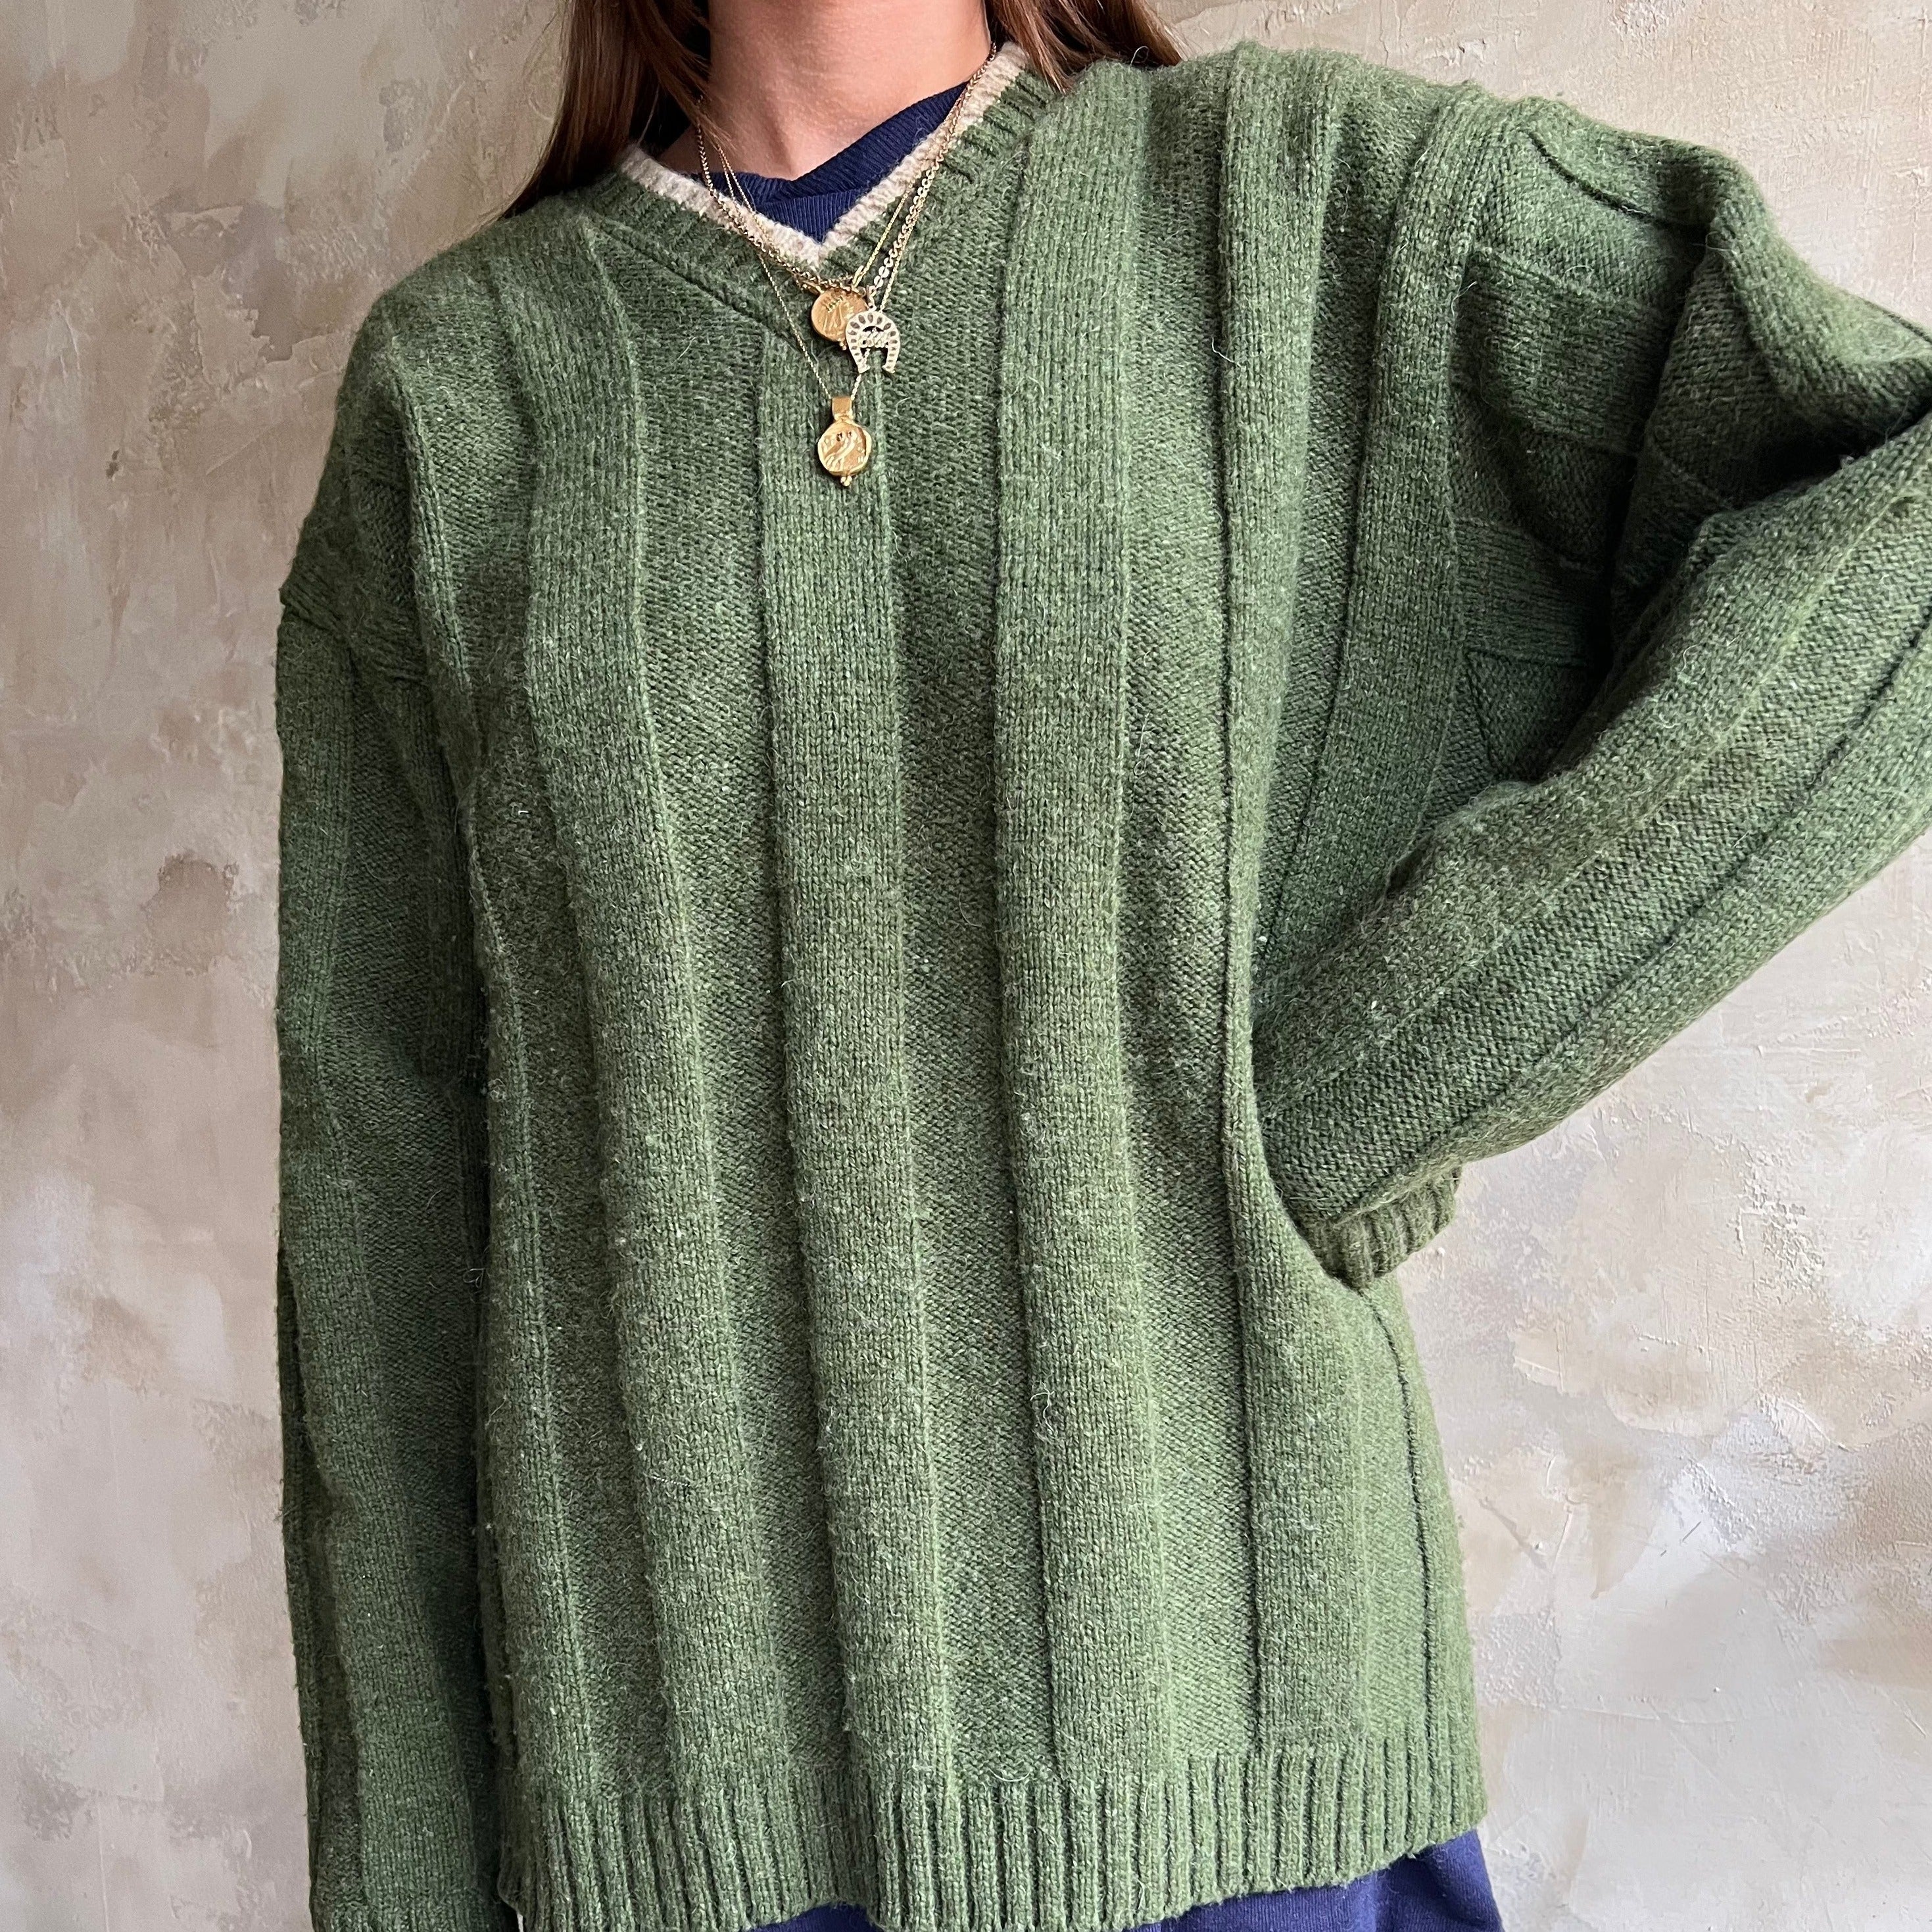 Green London Fog Sweater